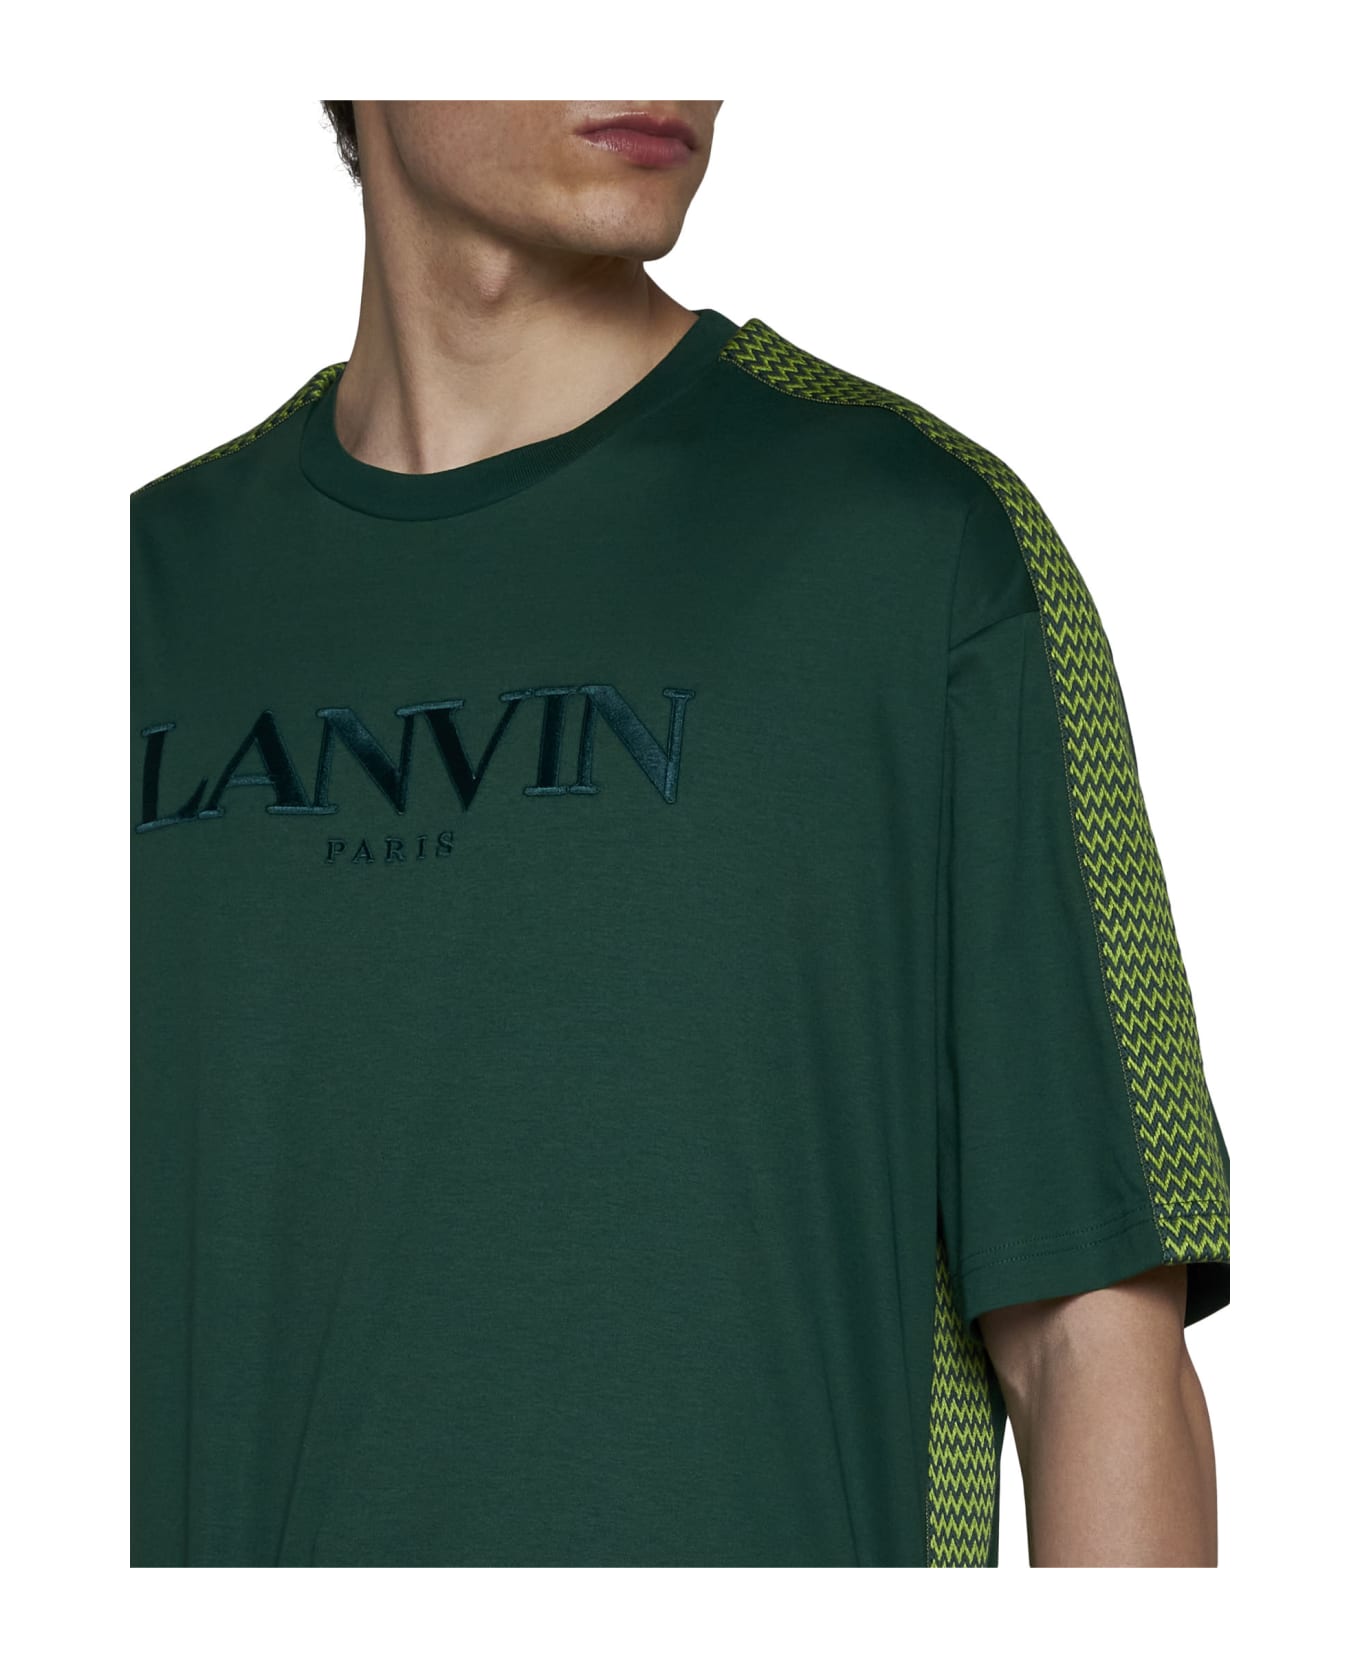 Lanvin T-Shirt - Bottle シャツ